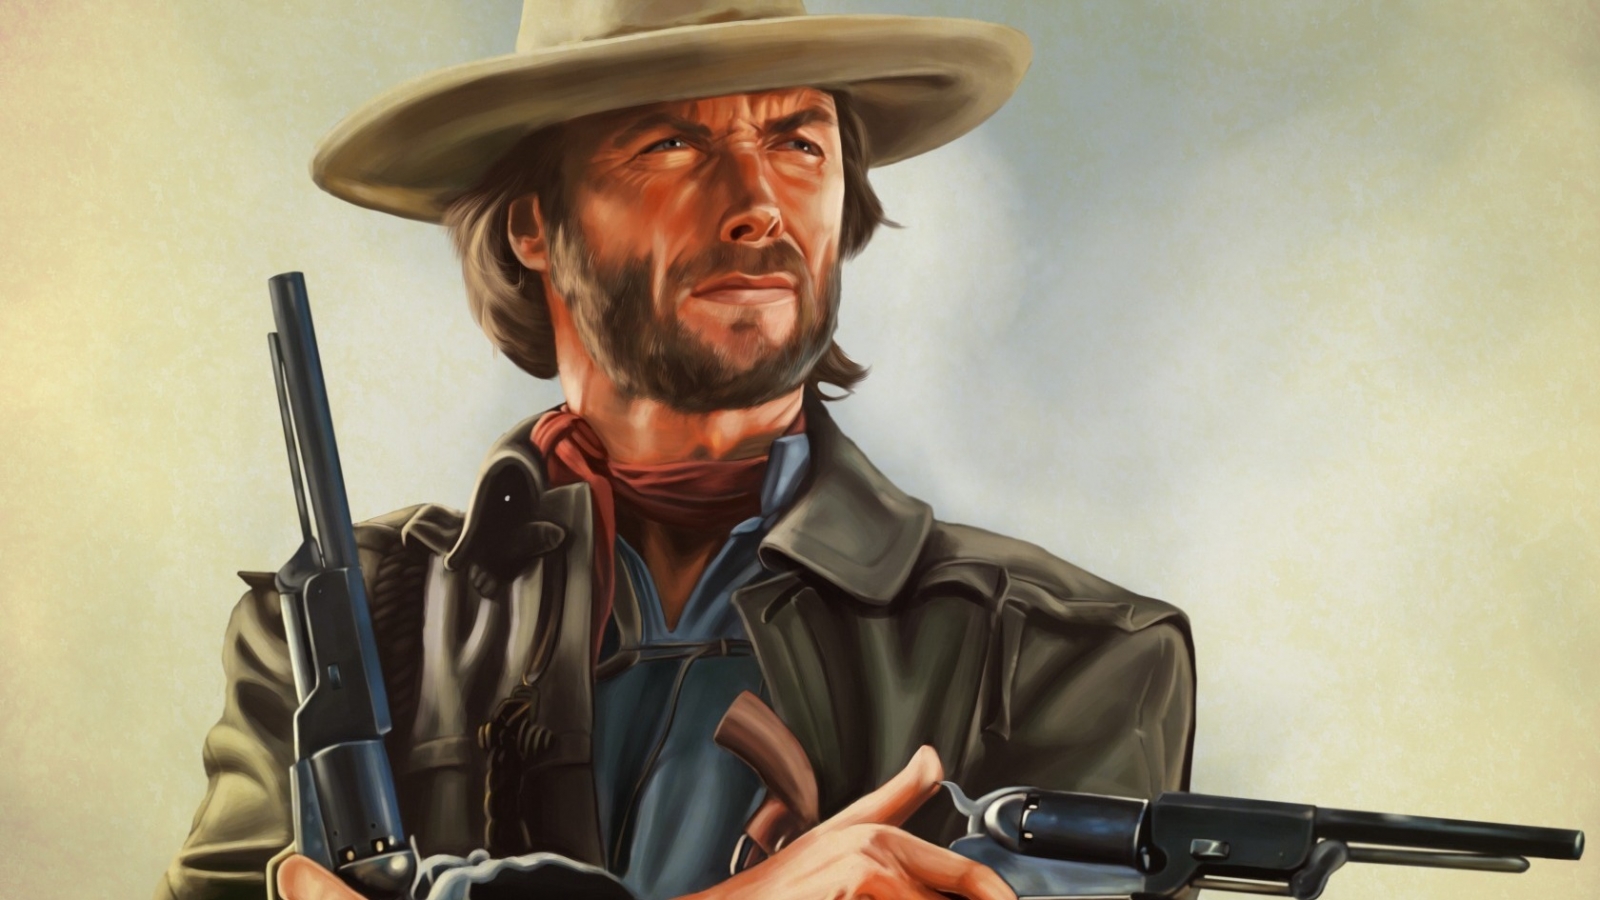 Clint Eastwood Artwork for 1600 x 900 HDTV resolution